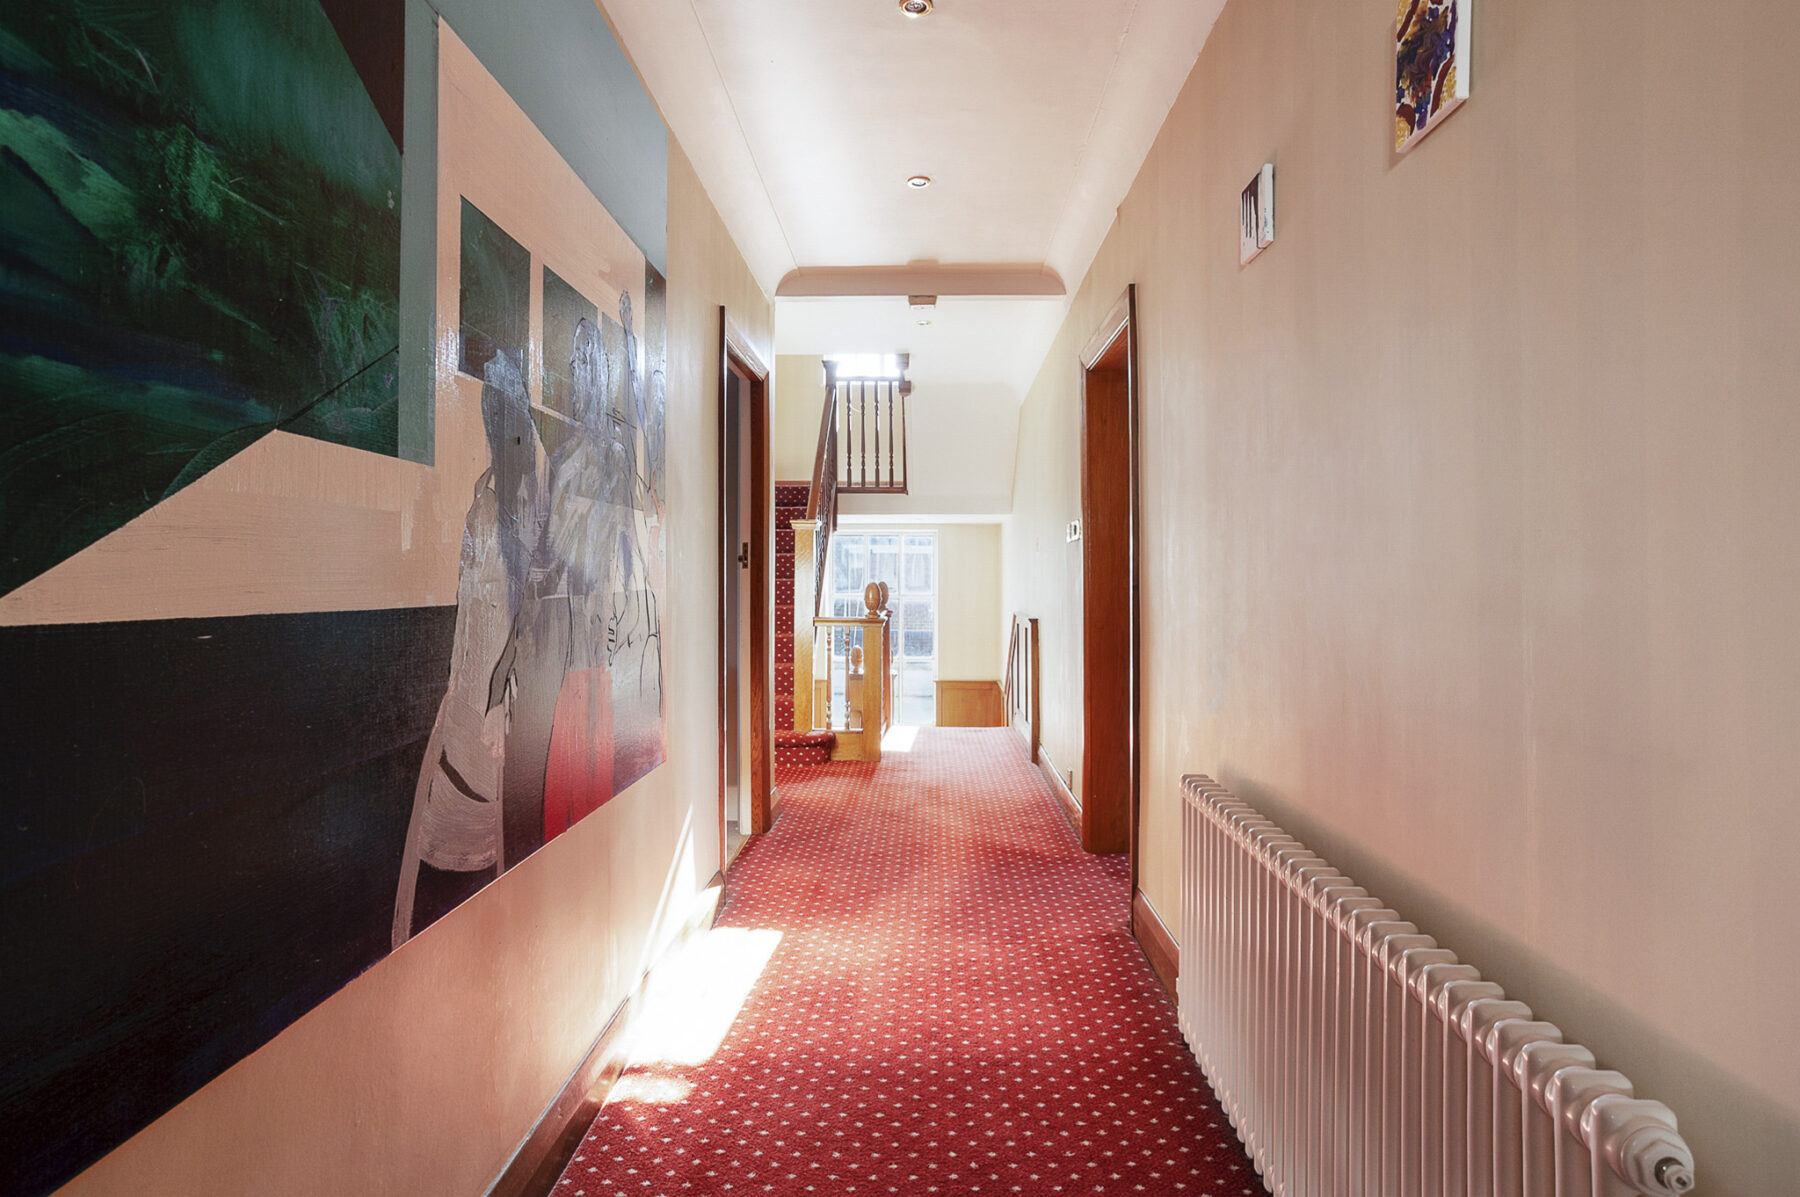 Long hallway carpet pale walls doorways painting sunlight TV filming location hire lodge London 41